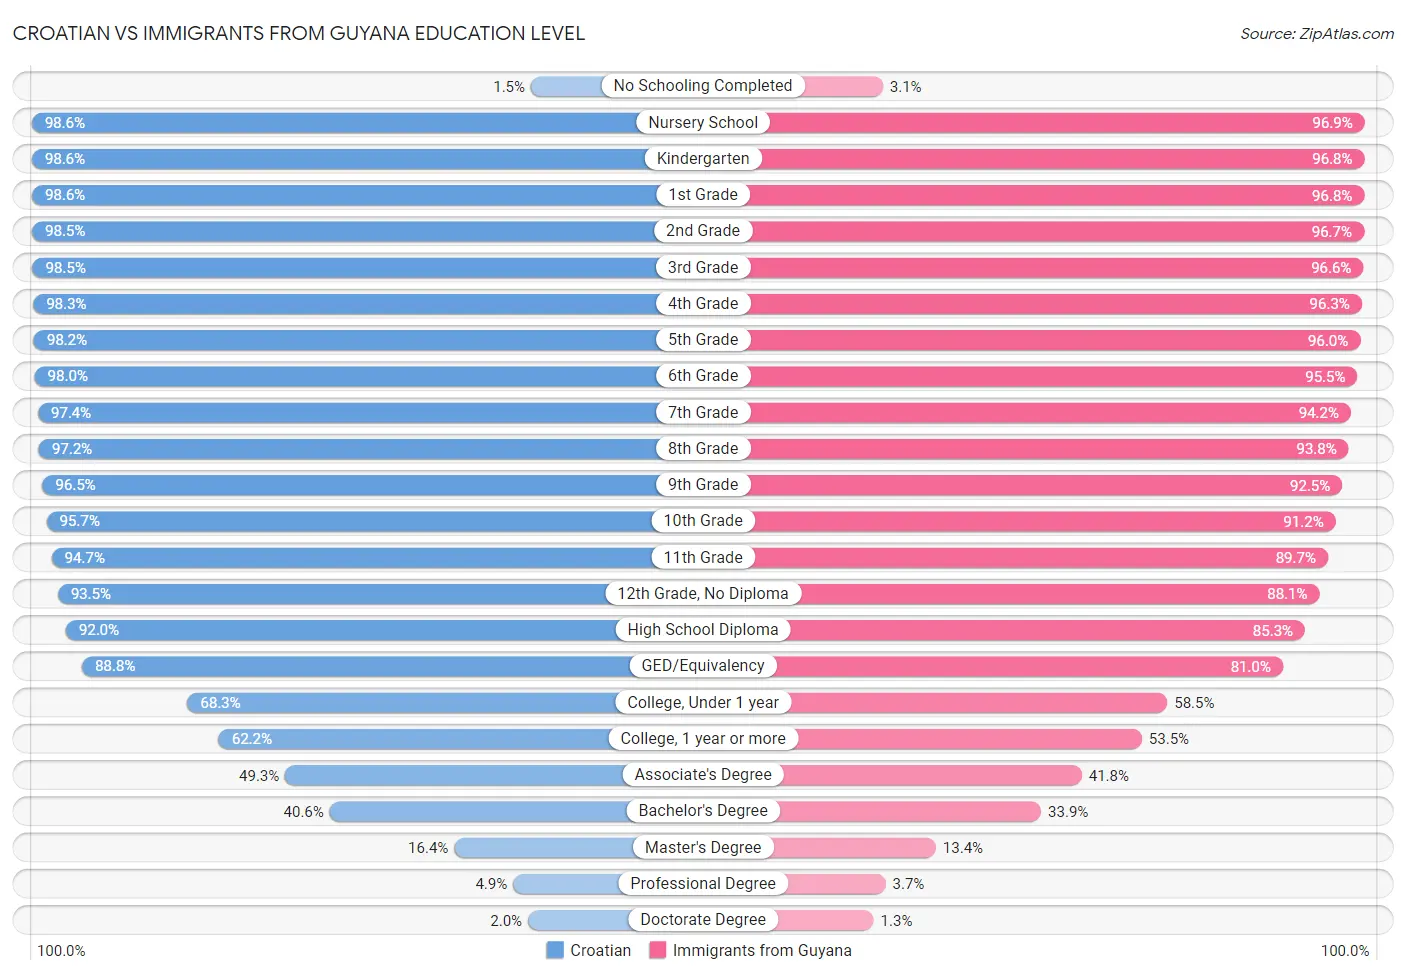 Croatian vs Immigrants from Guyana Education Level